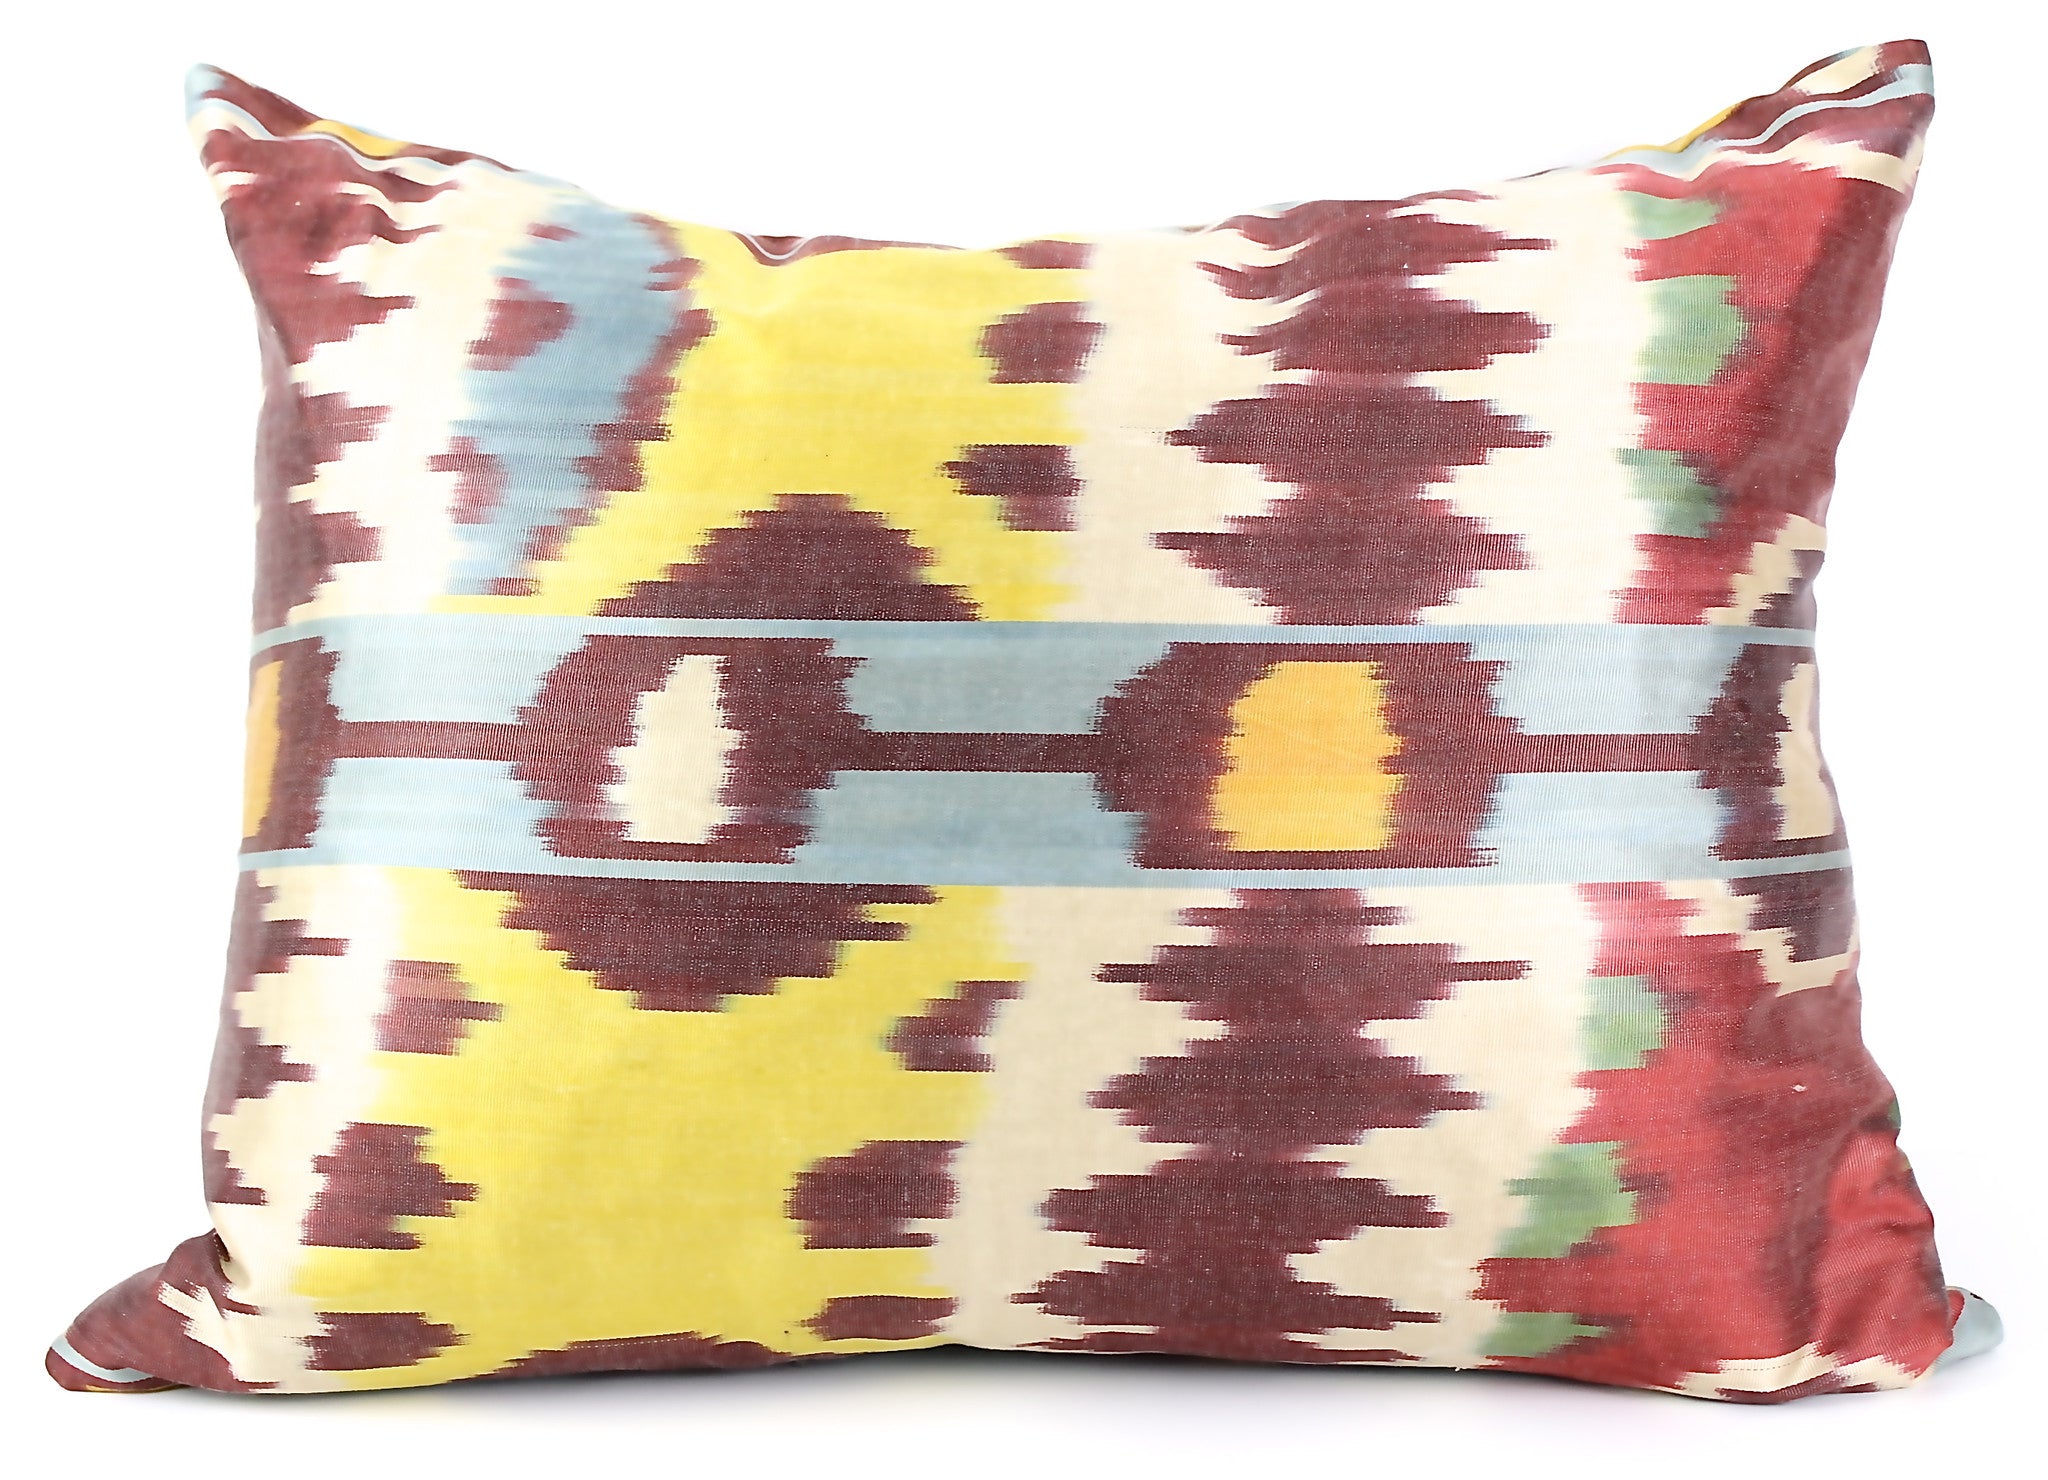 Uzbek silk pillow